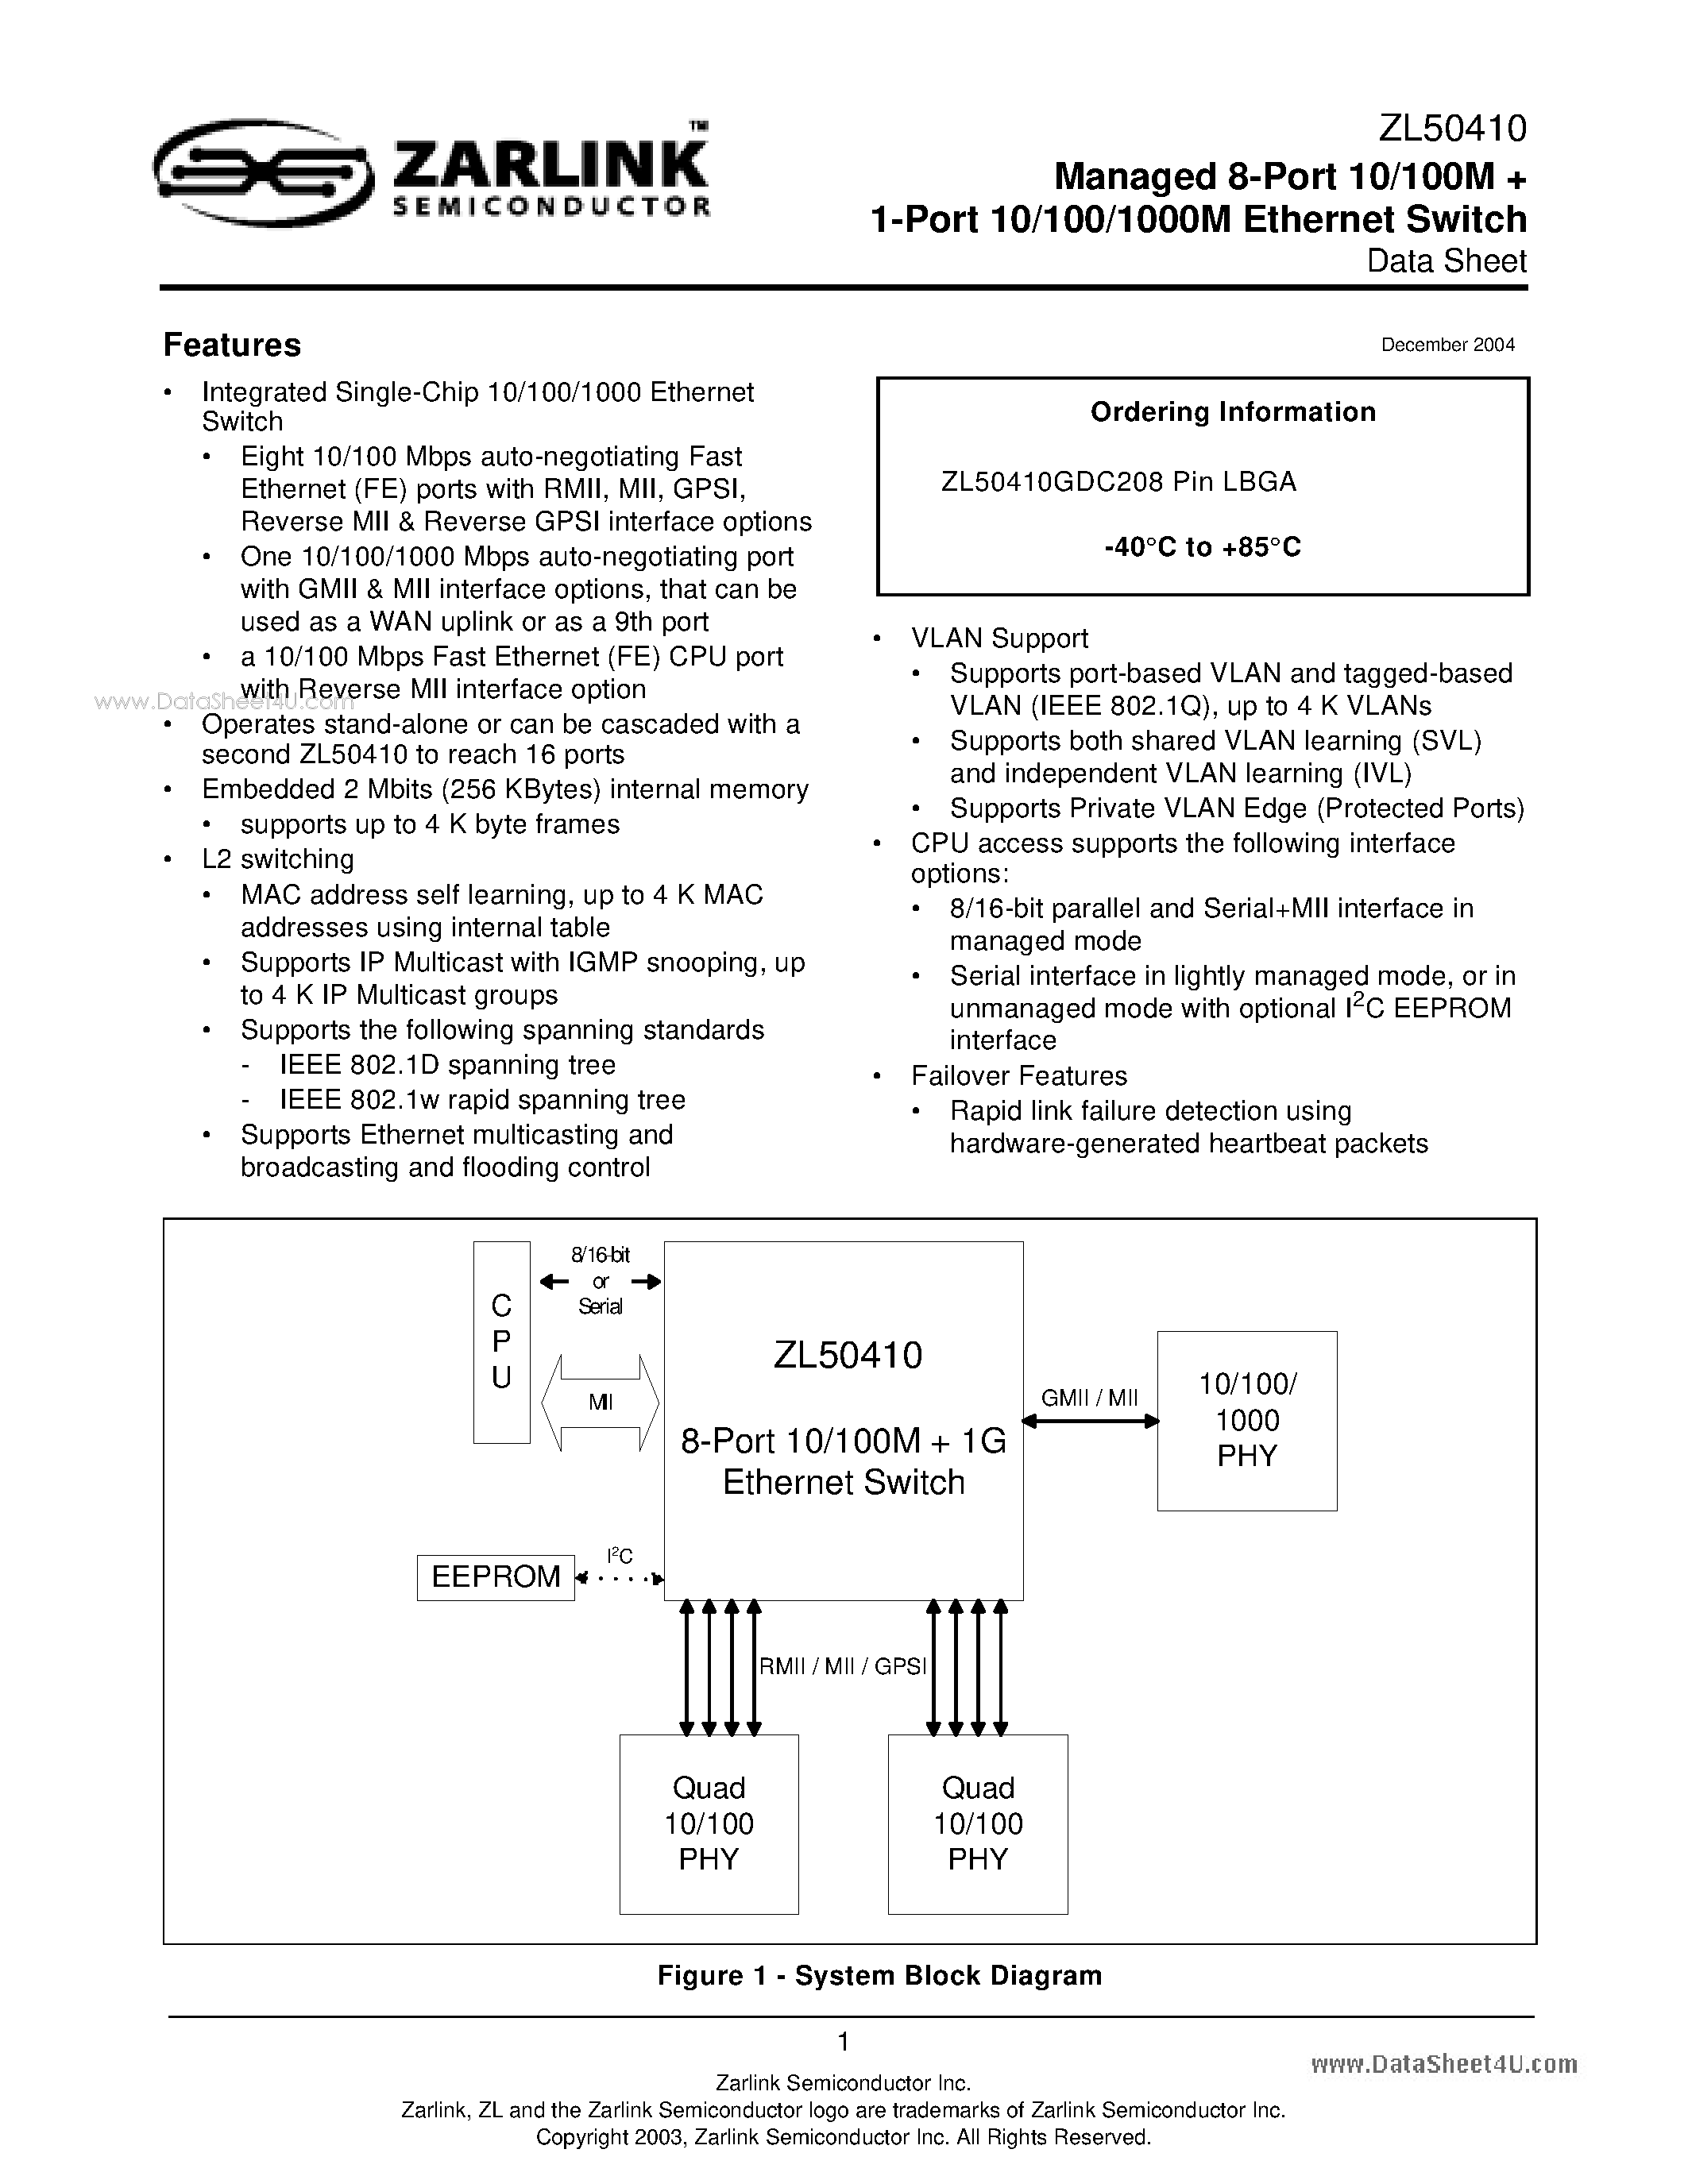 Даташит ZL50410 - Managed 8-Port 10/100M 1-Port 10/100/1000M Ethernet Switch страница 1